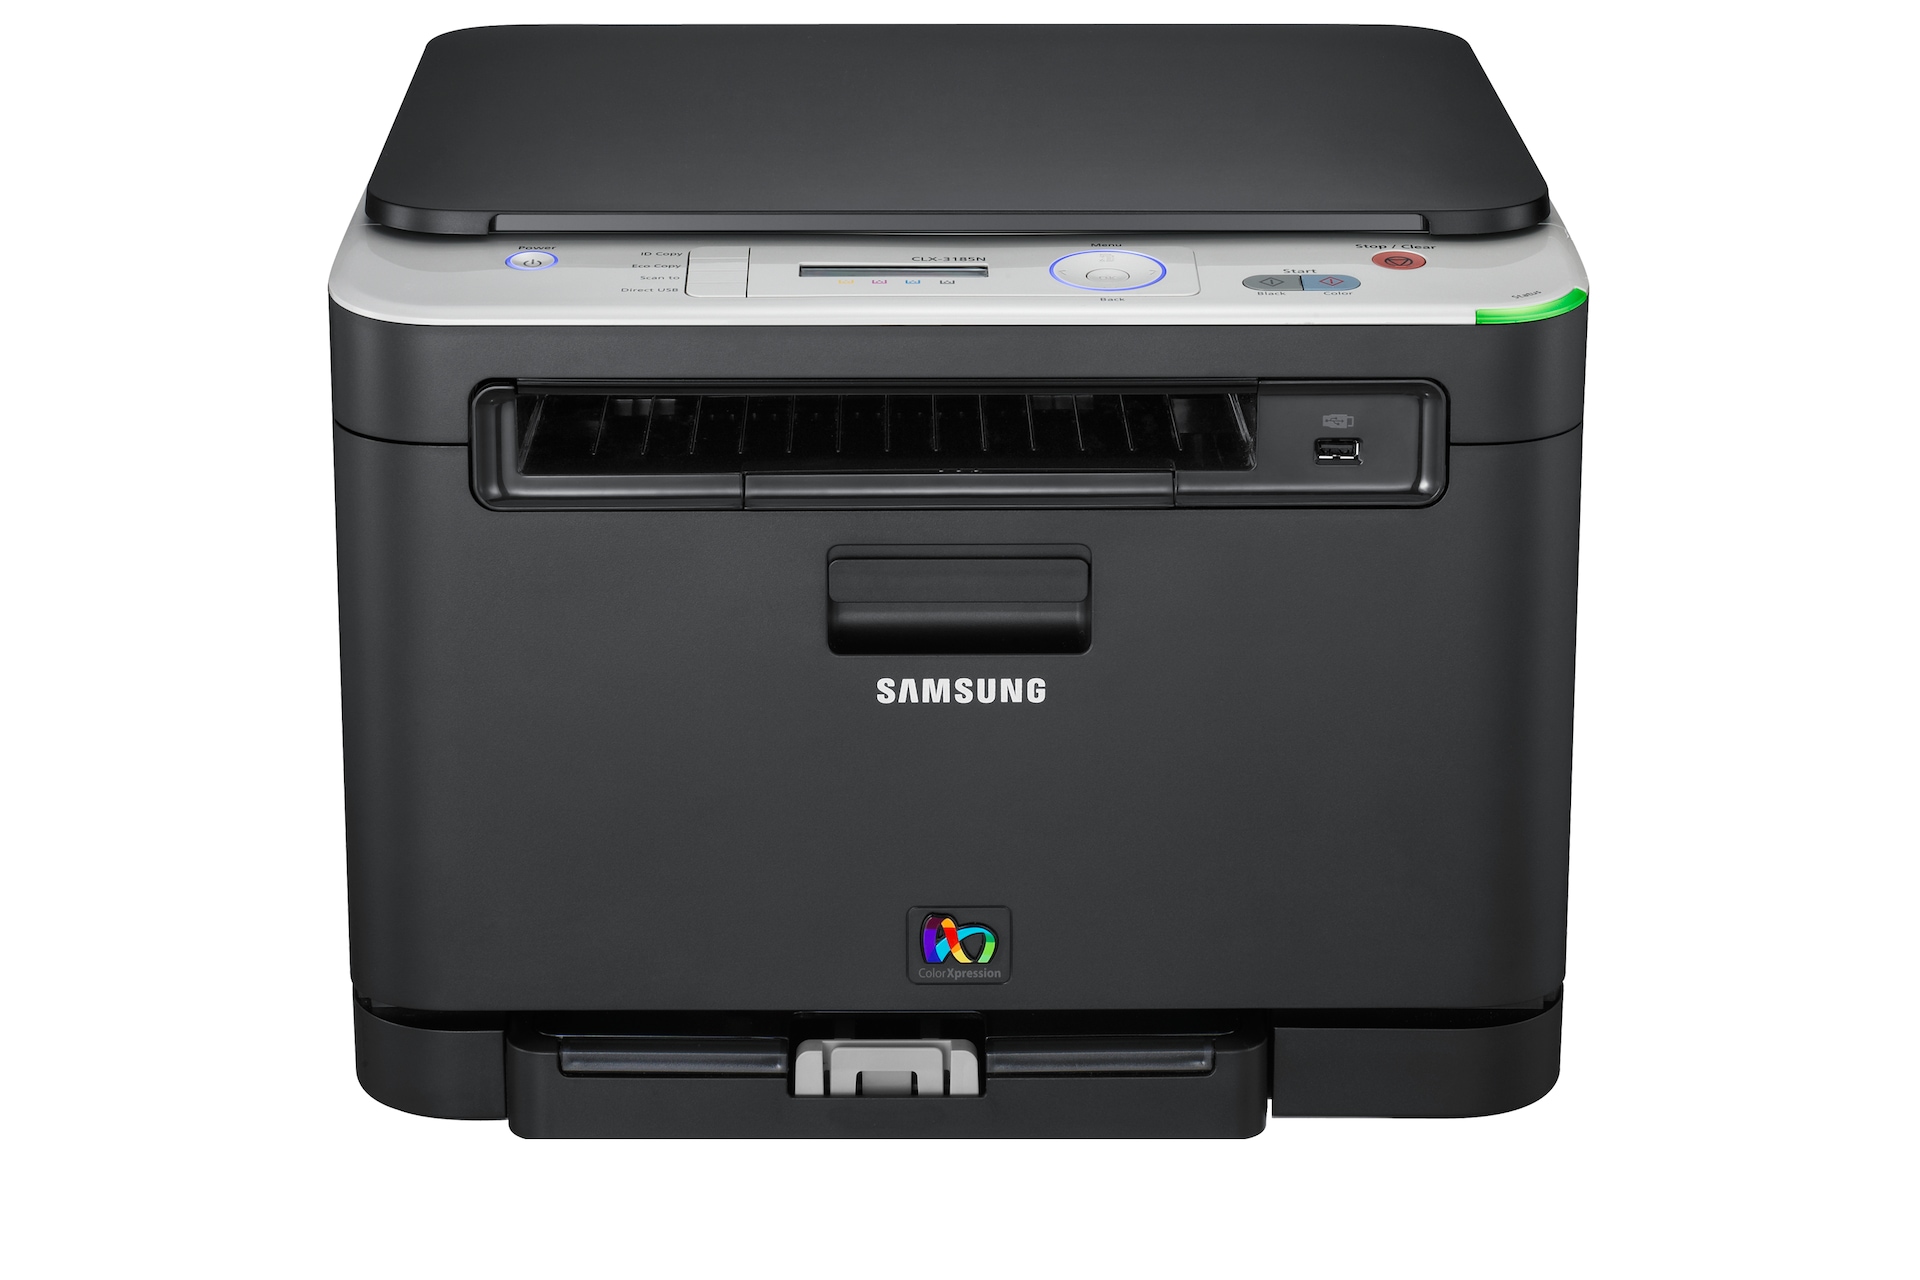 Samsung  3175fn Color Laser Multifunction Printer on Clx 3  185n Imprimante Multifonction Laser Couleur   Vue D Ensemble